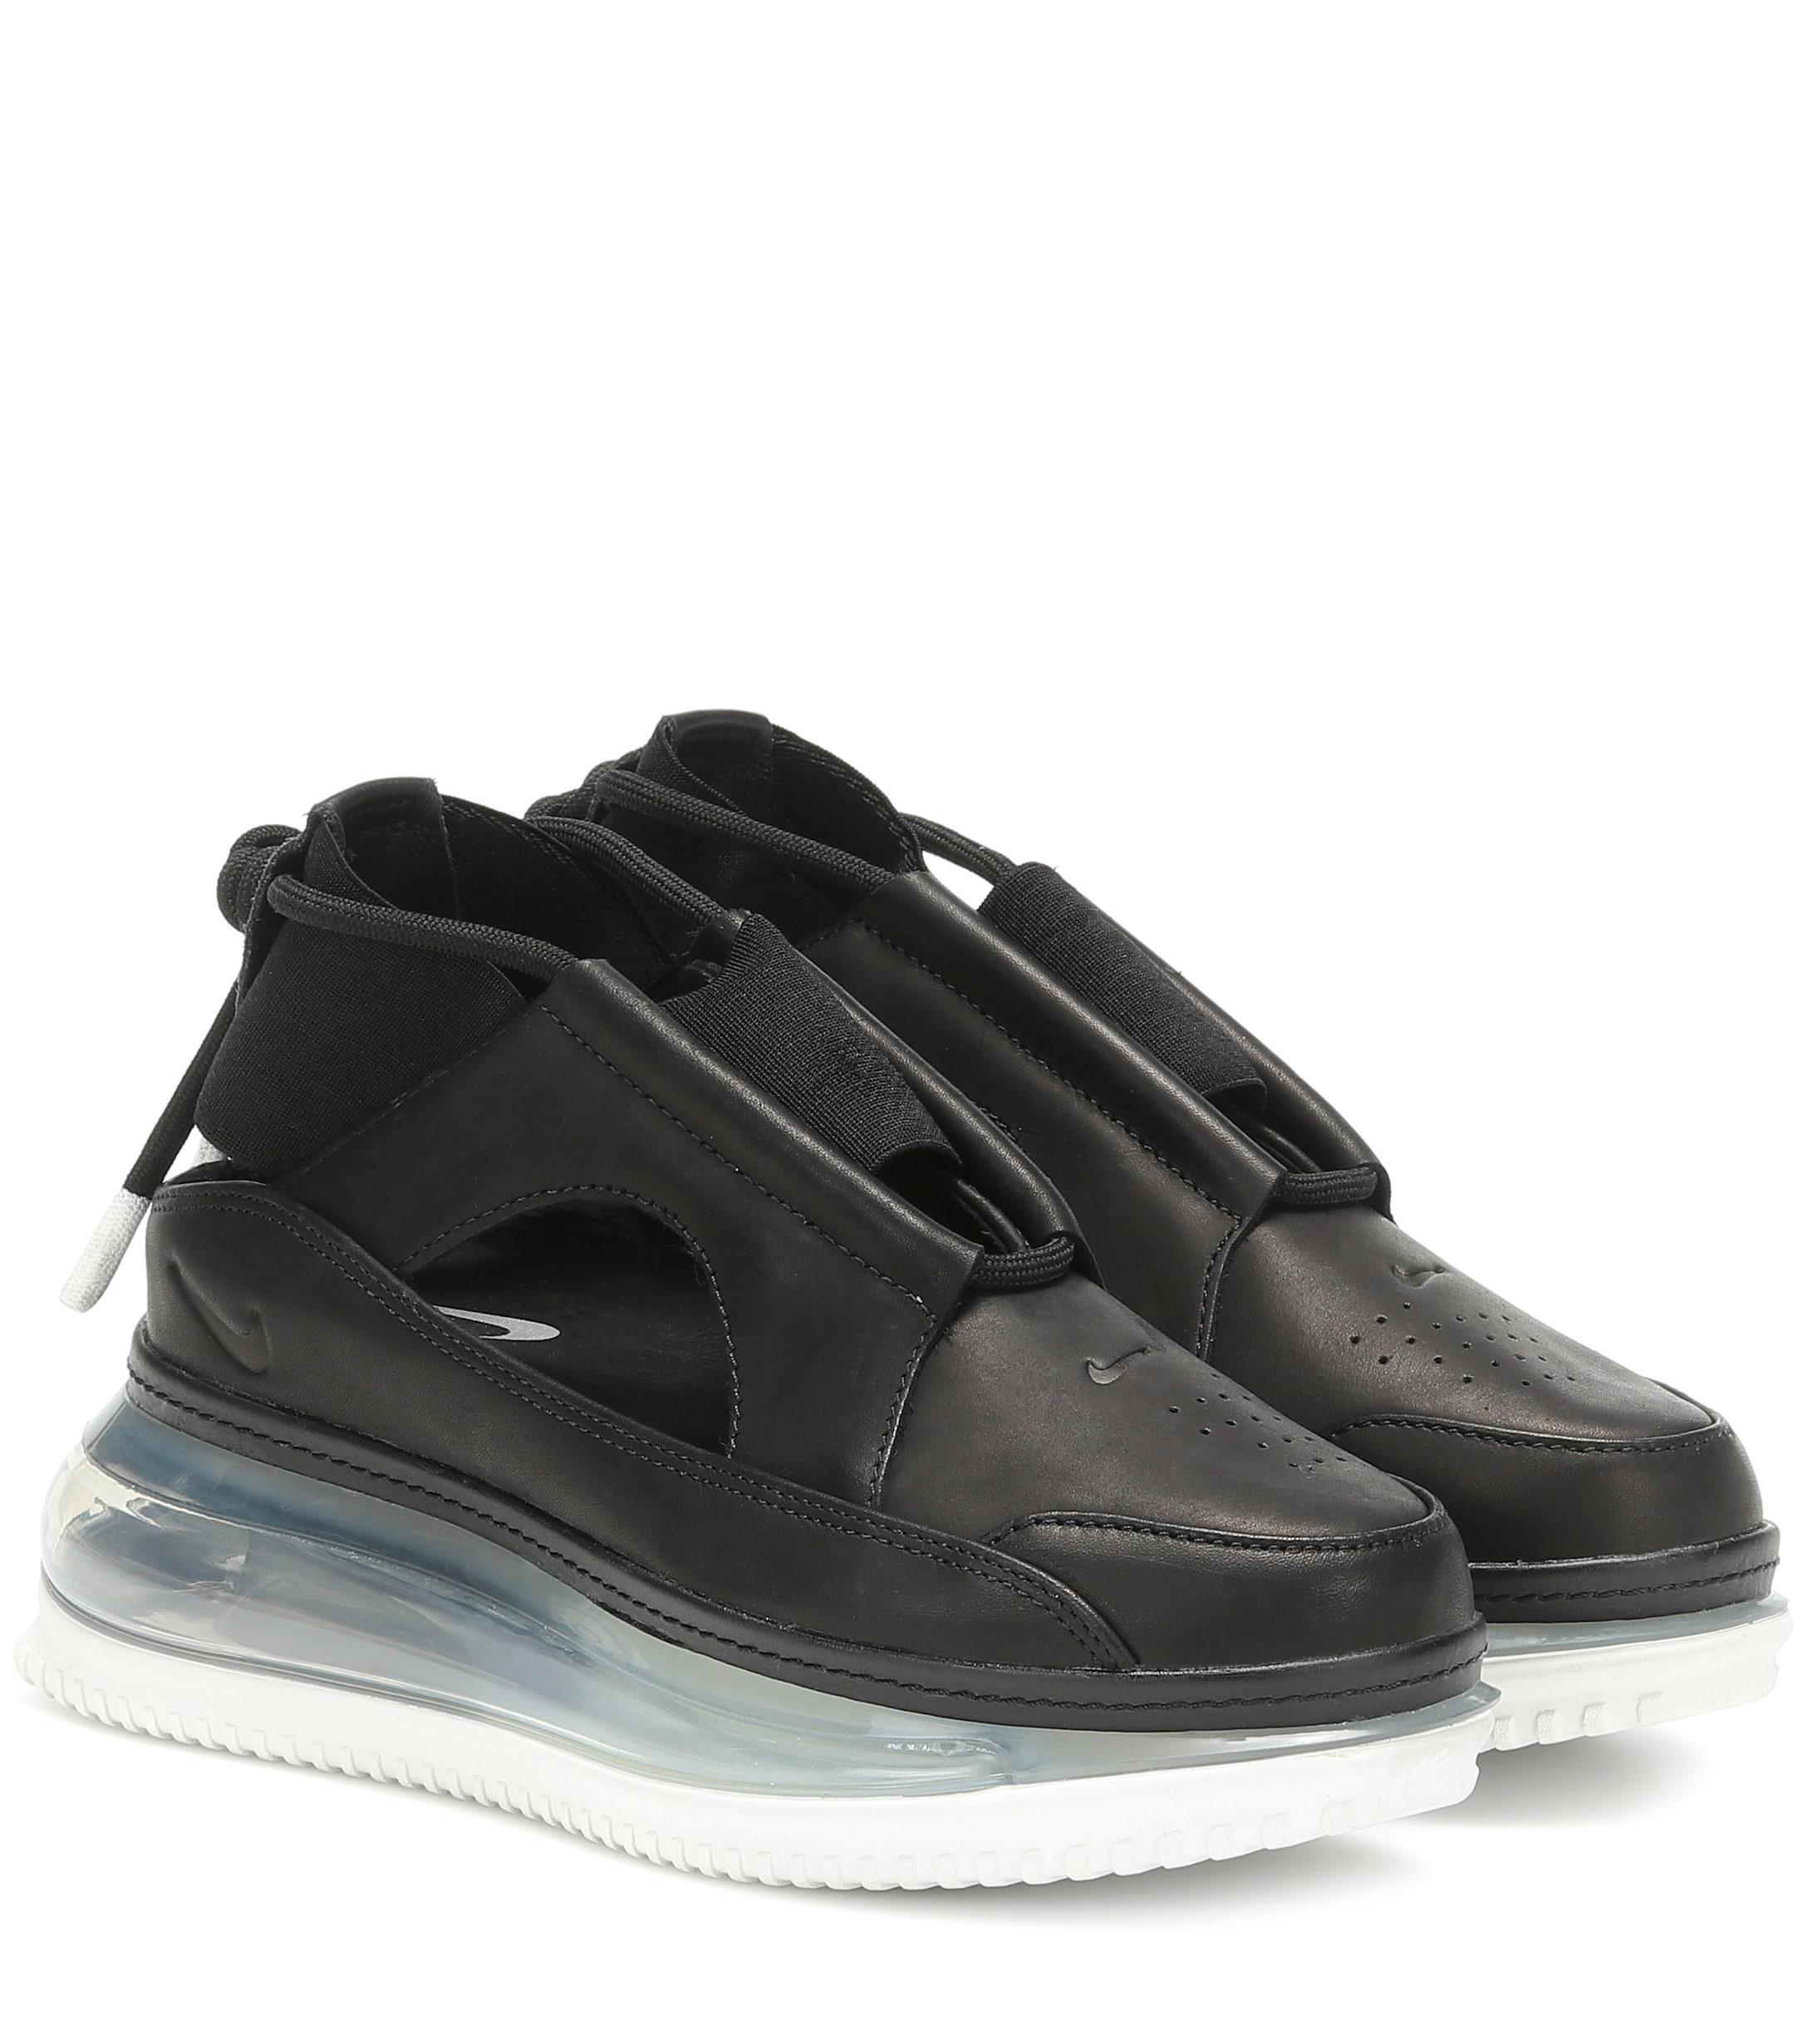 Nike Air Max 720 Leather Sneaker in Black | Lyst UK